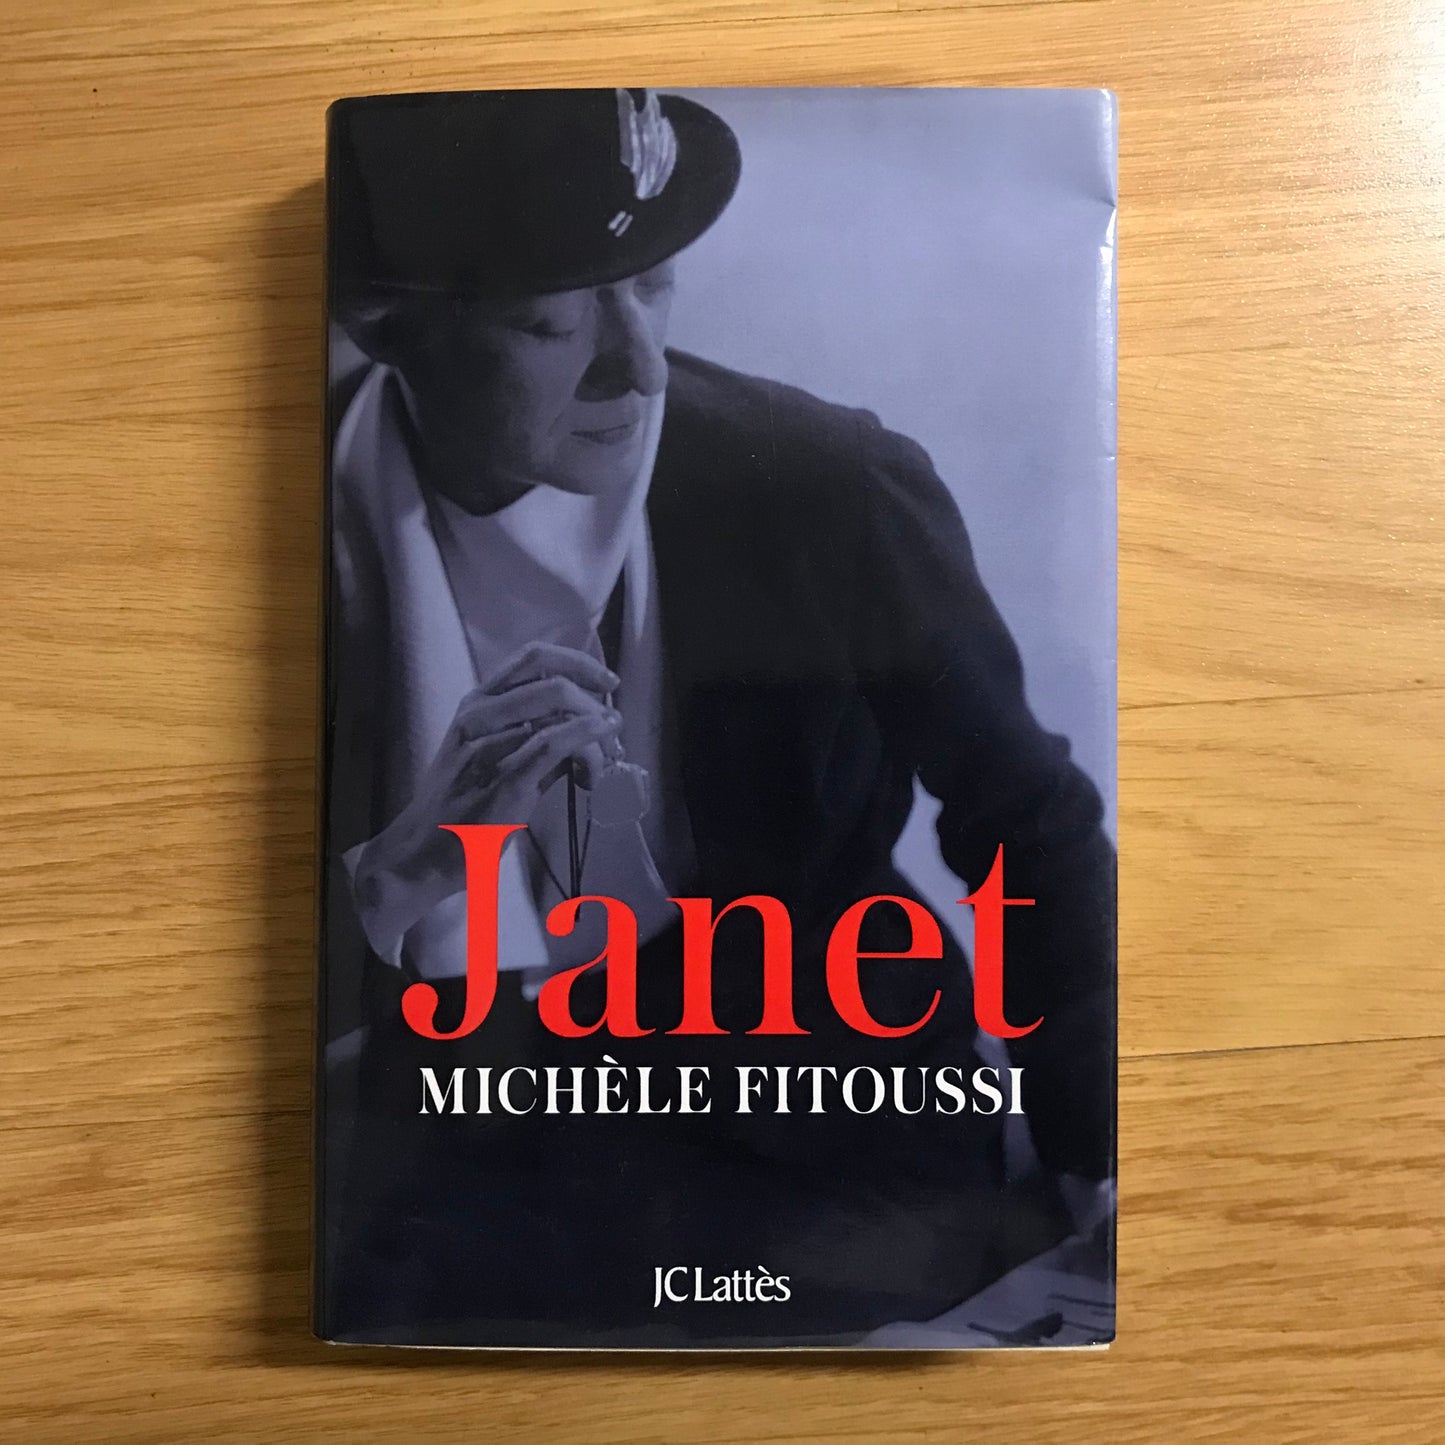 Fitoussi, Michèle - Janet